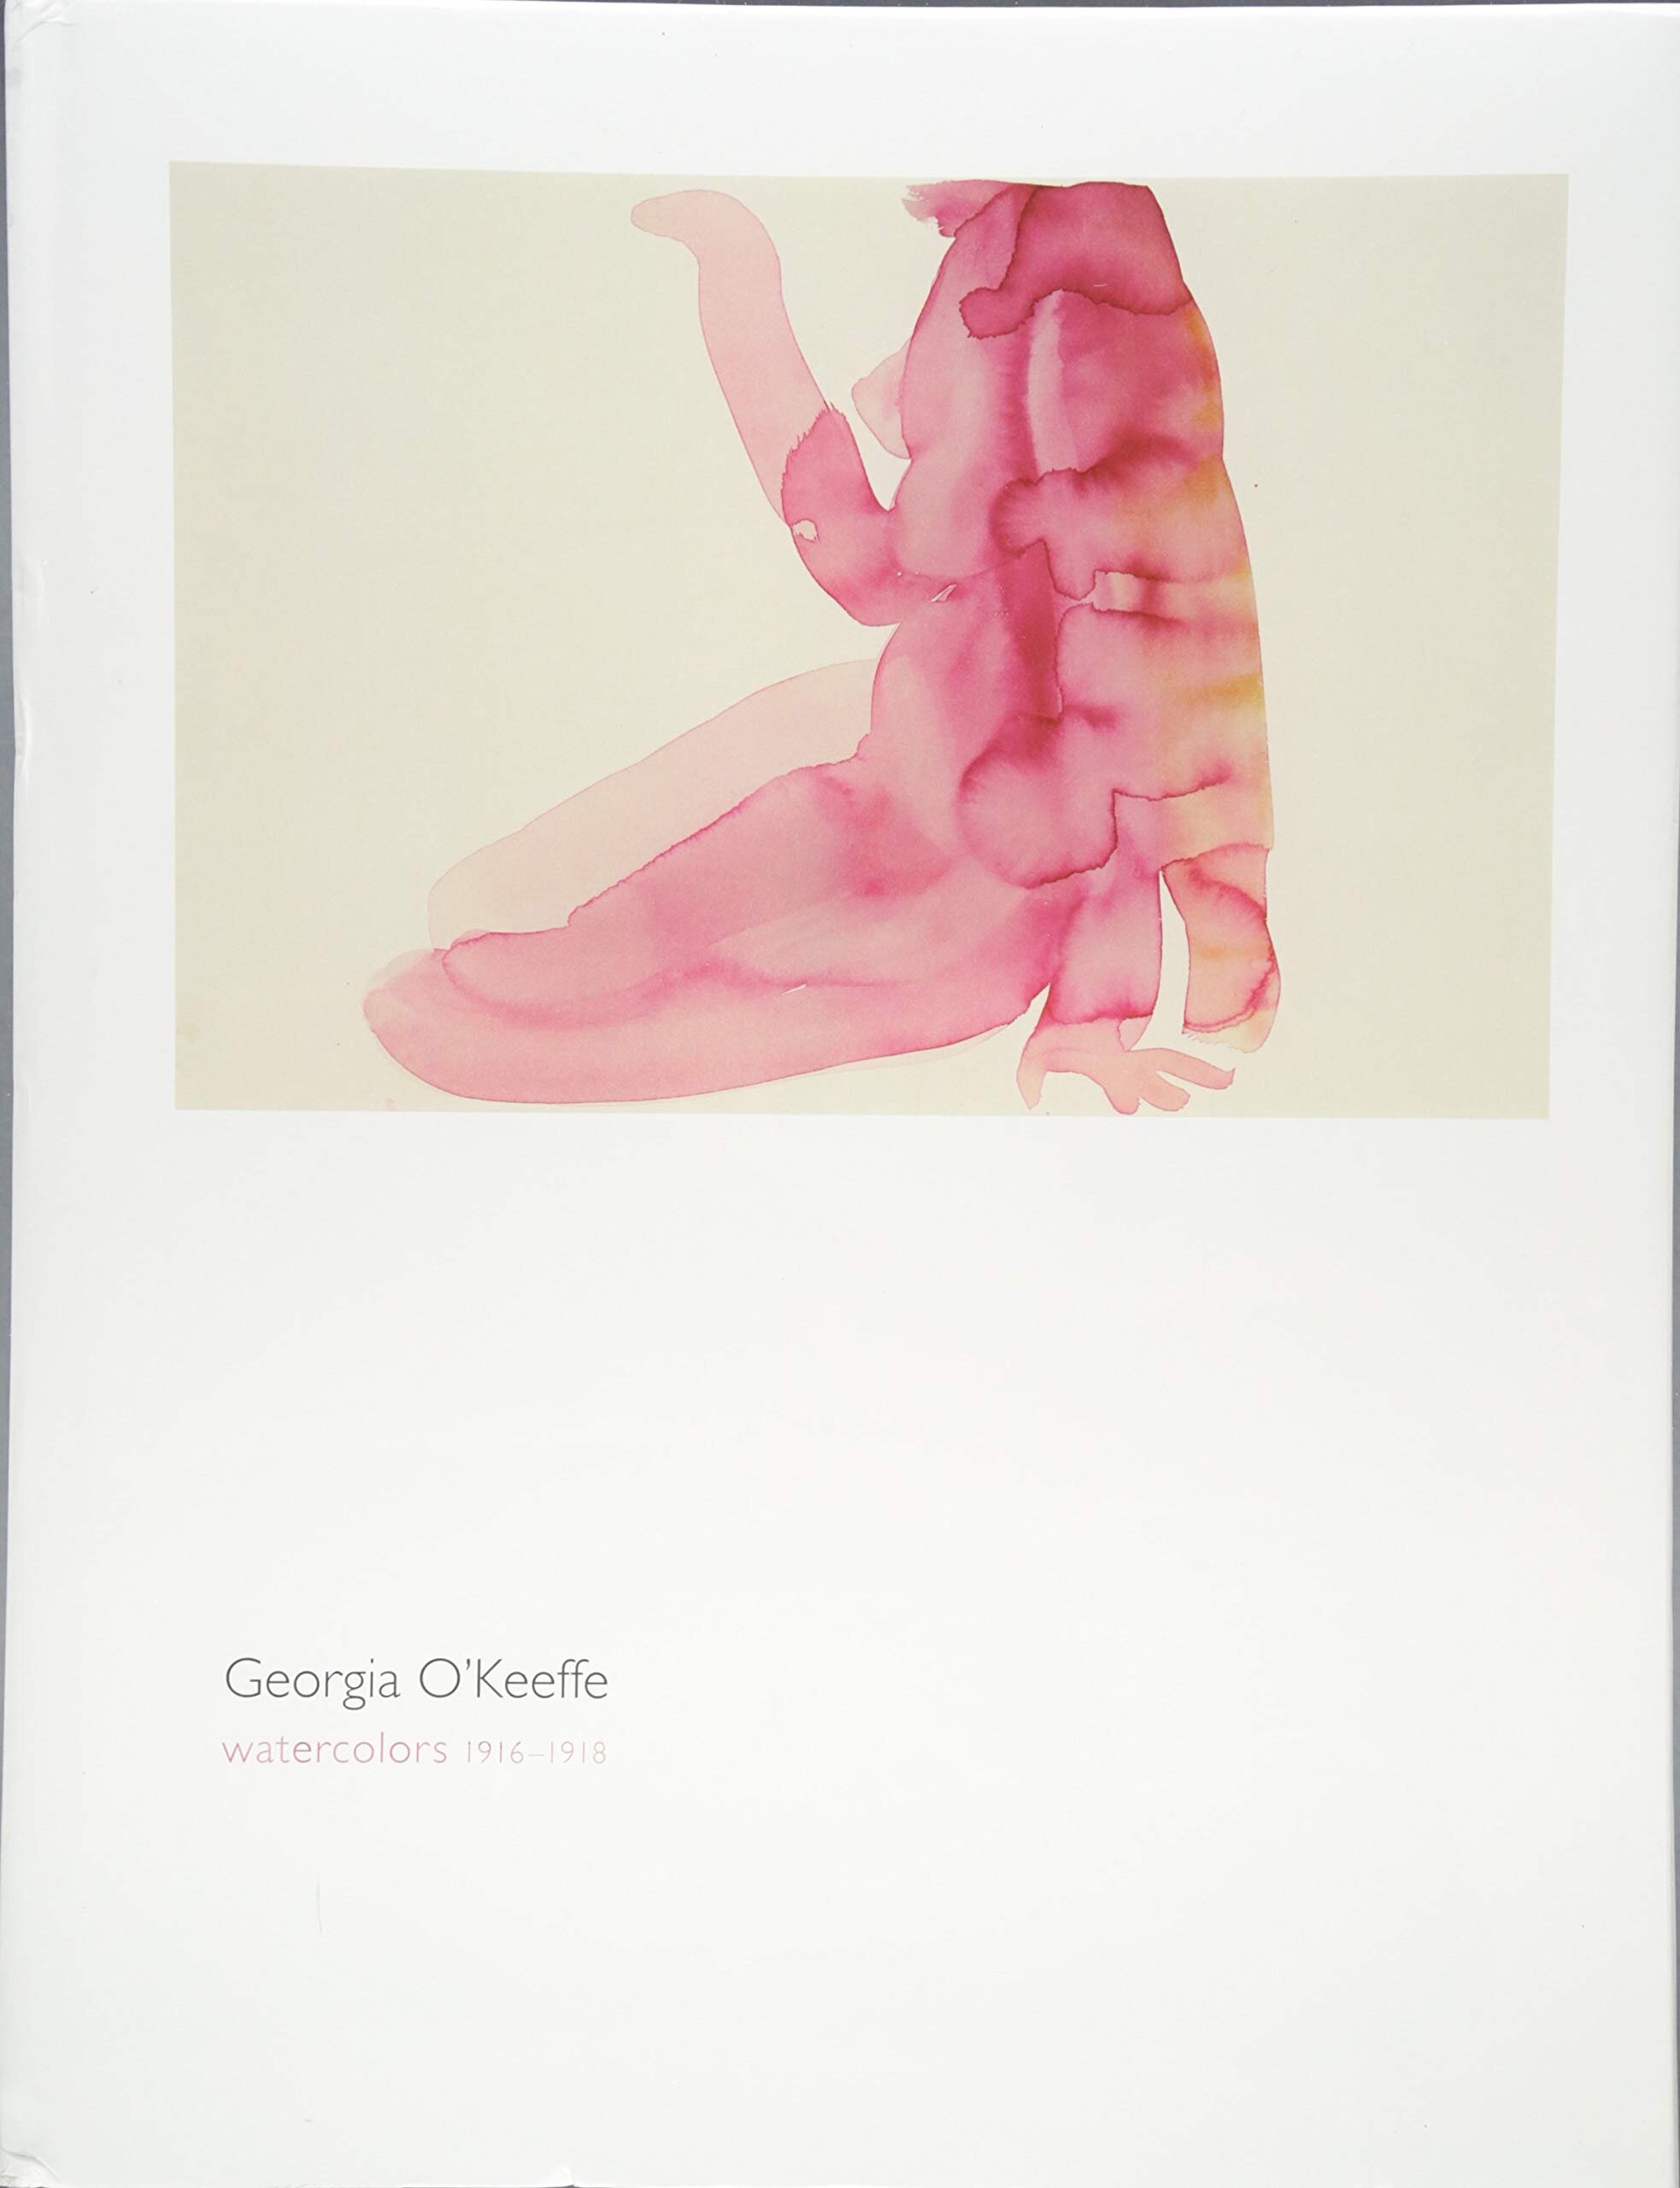 Georgia O'Keefe: Watercolors